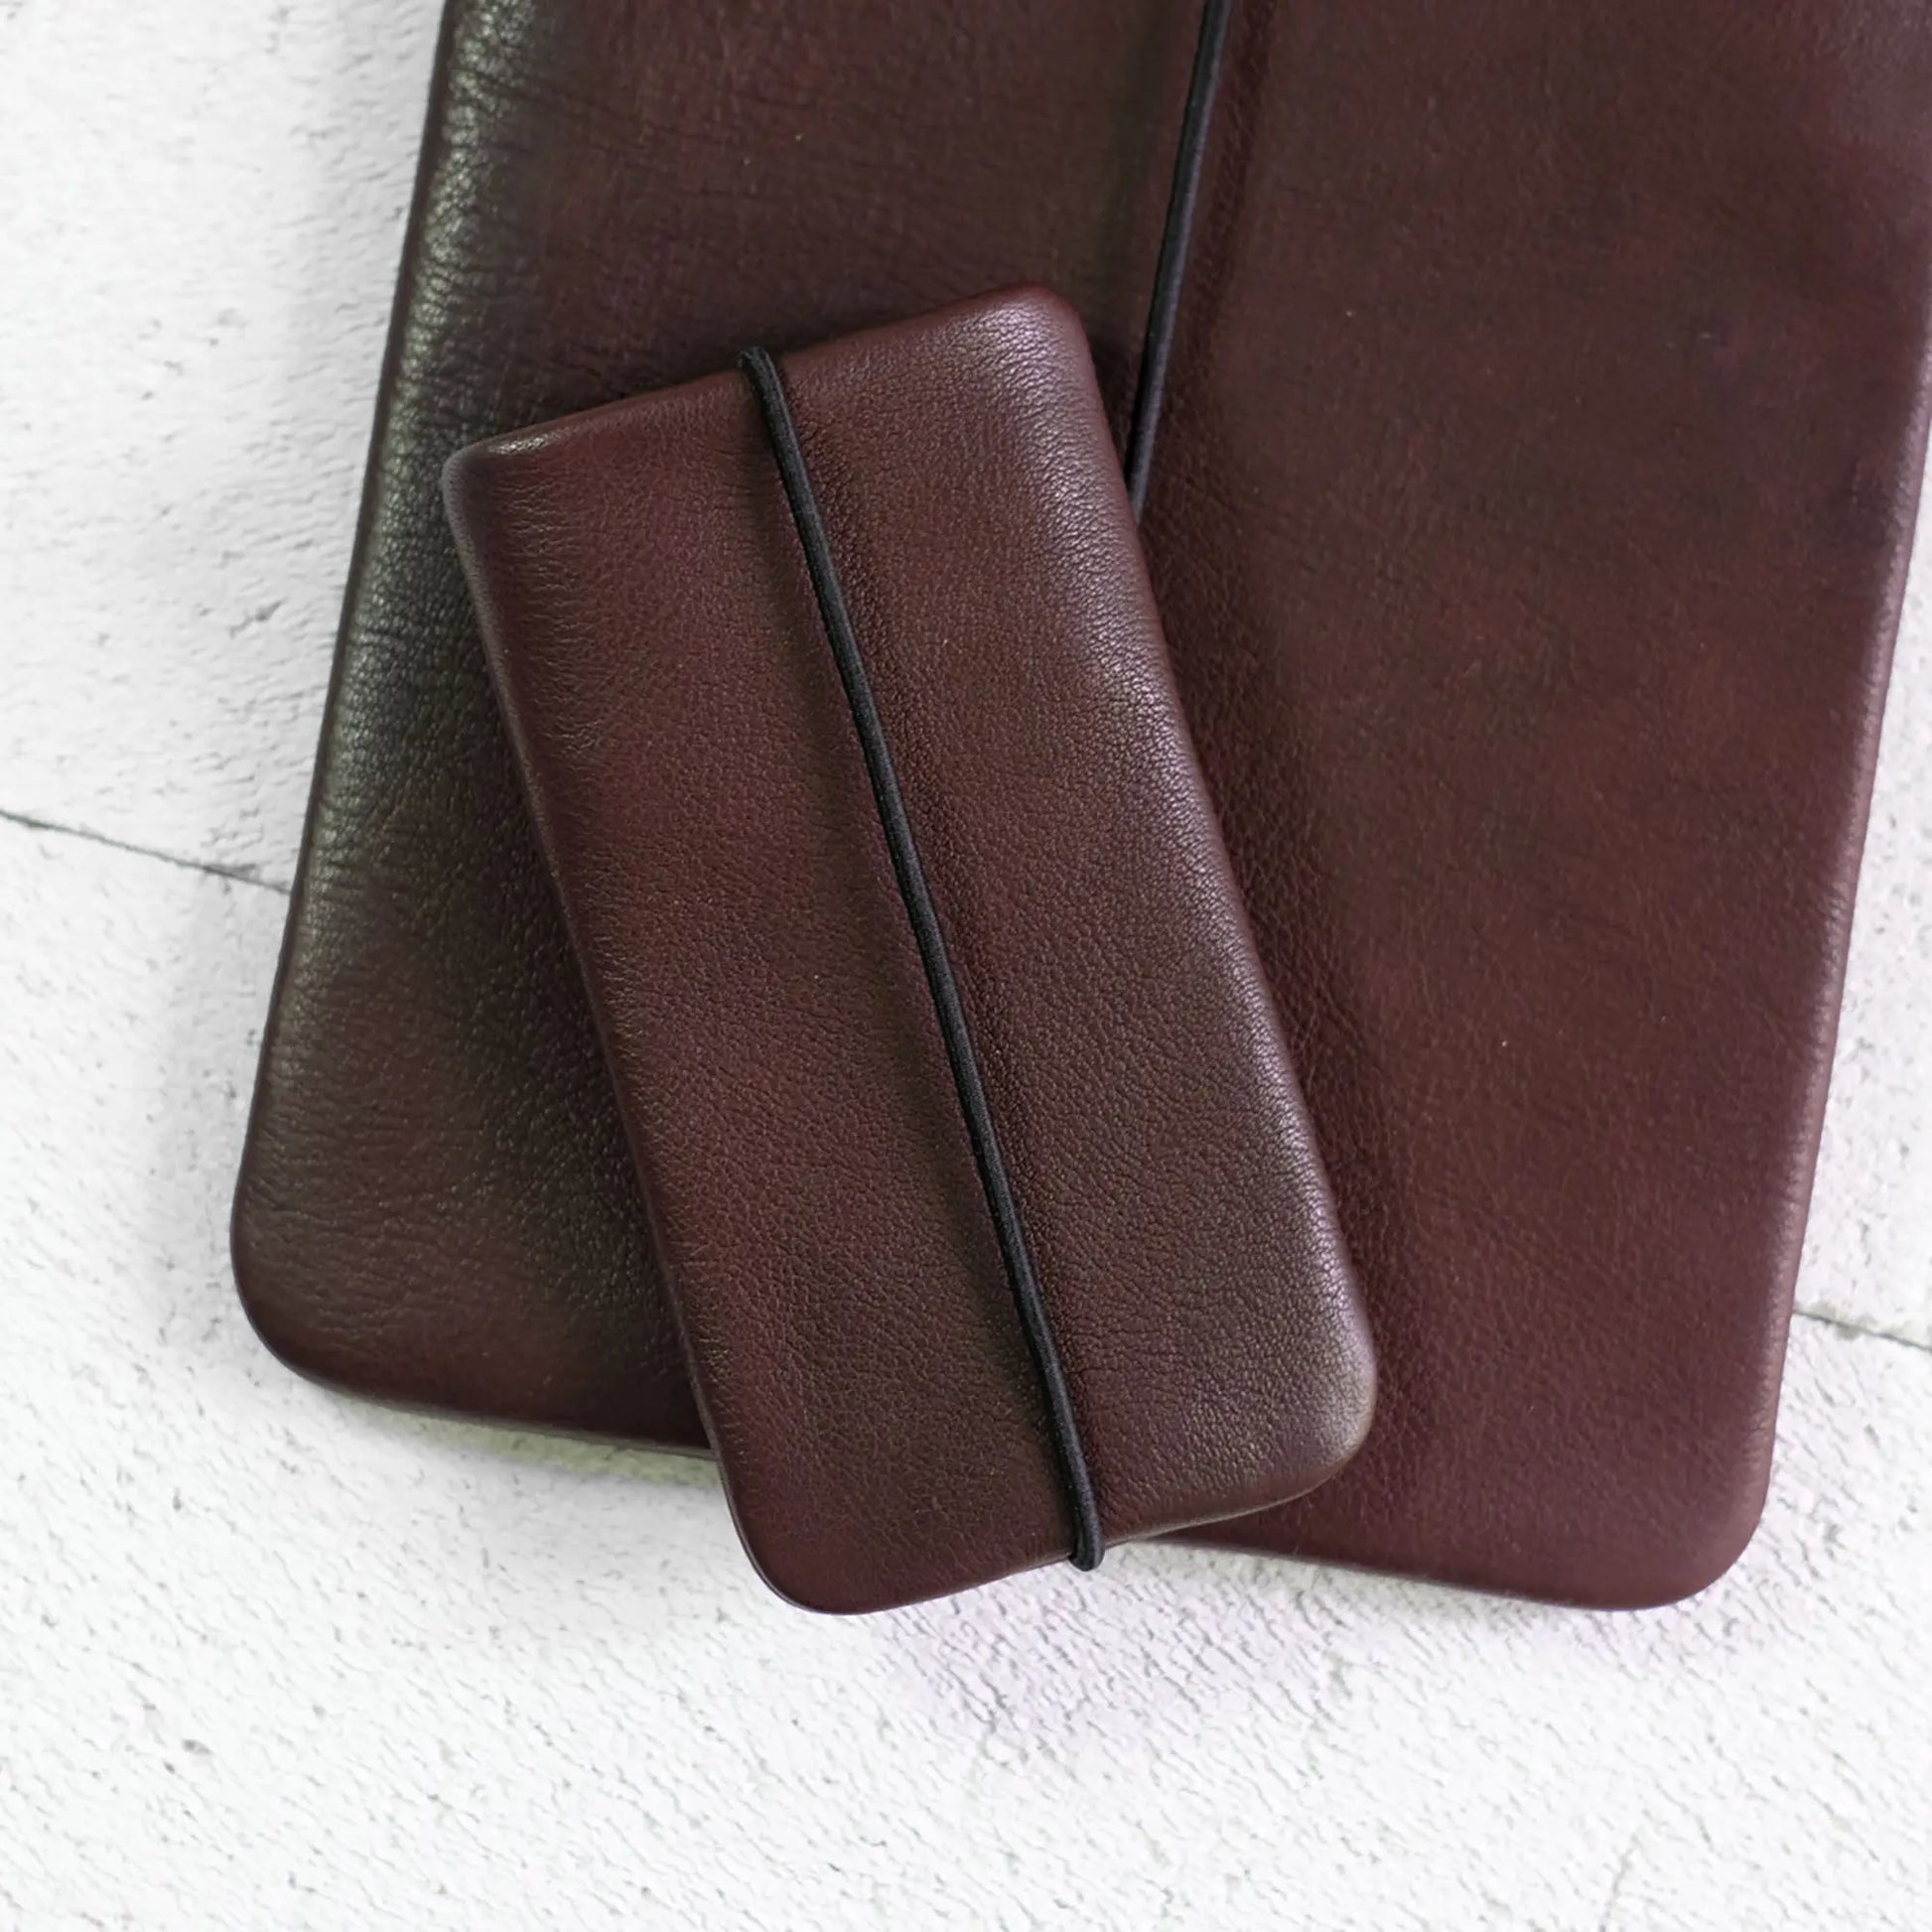 schokobraune Smartphonehülle aus Leder liegt auf einer Notebookhülle aus schokobraunem Leder